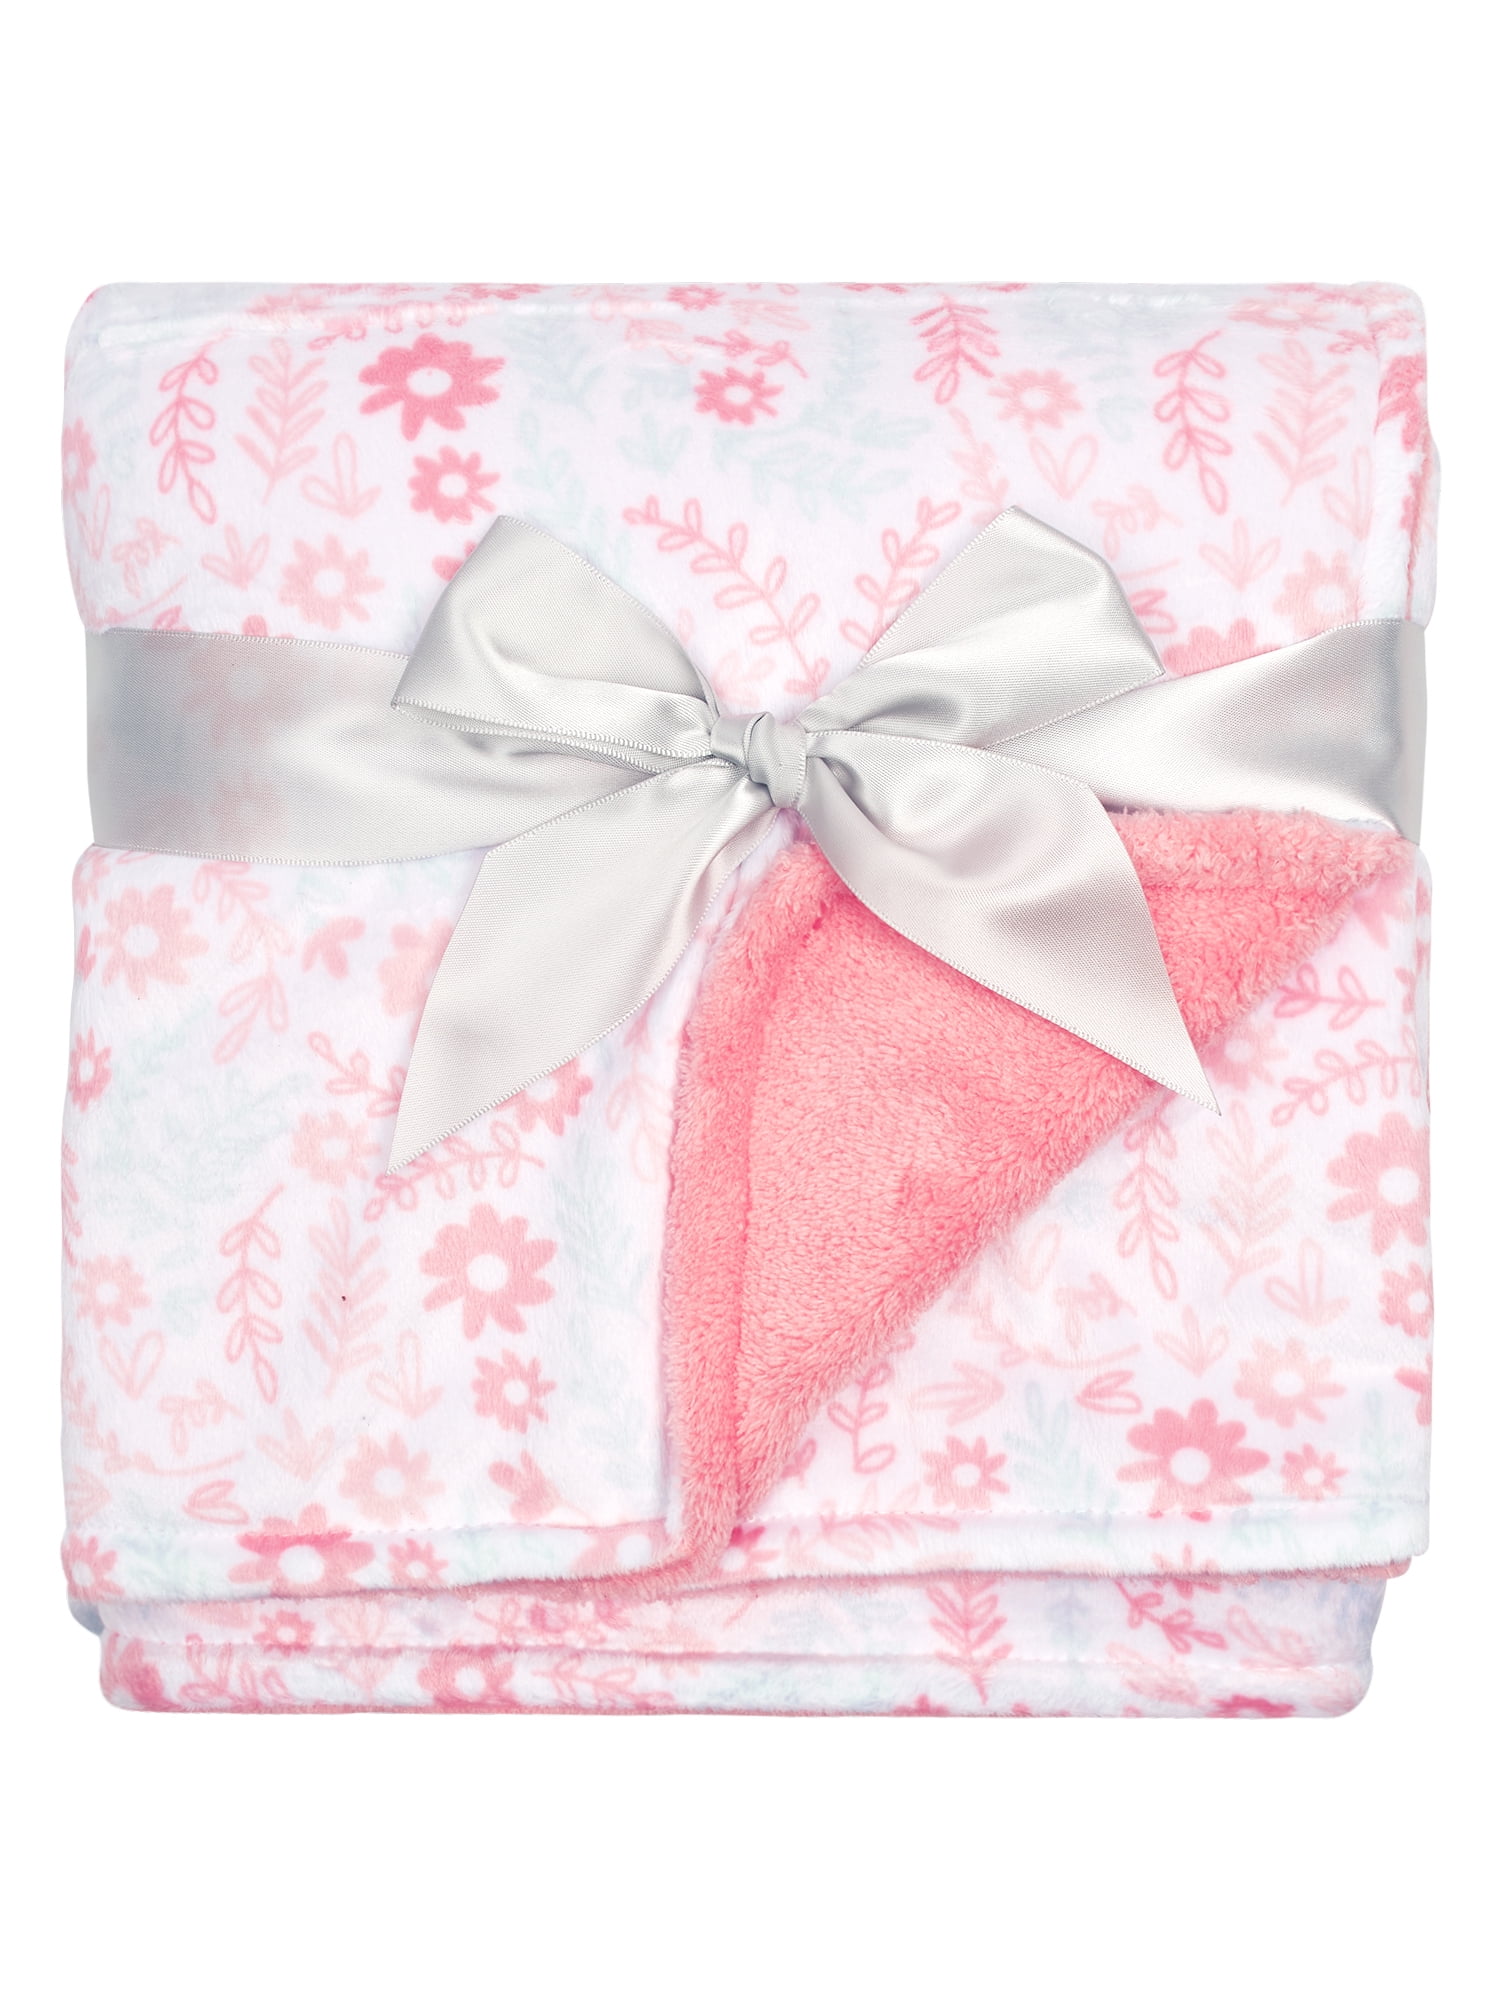 Super Soft Plush Blanket Purple Pink Floral White Dots Girl's Snuggly Blanket 